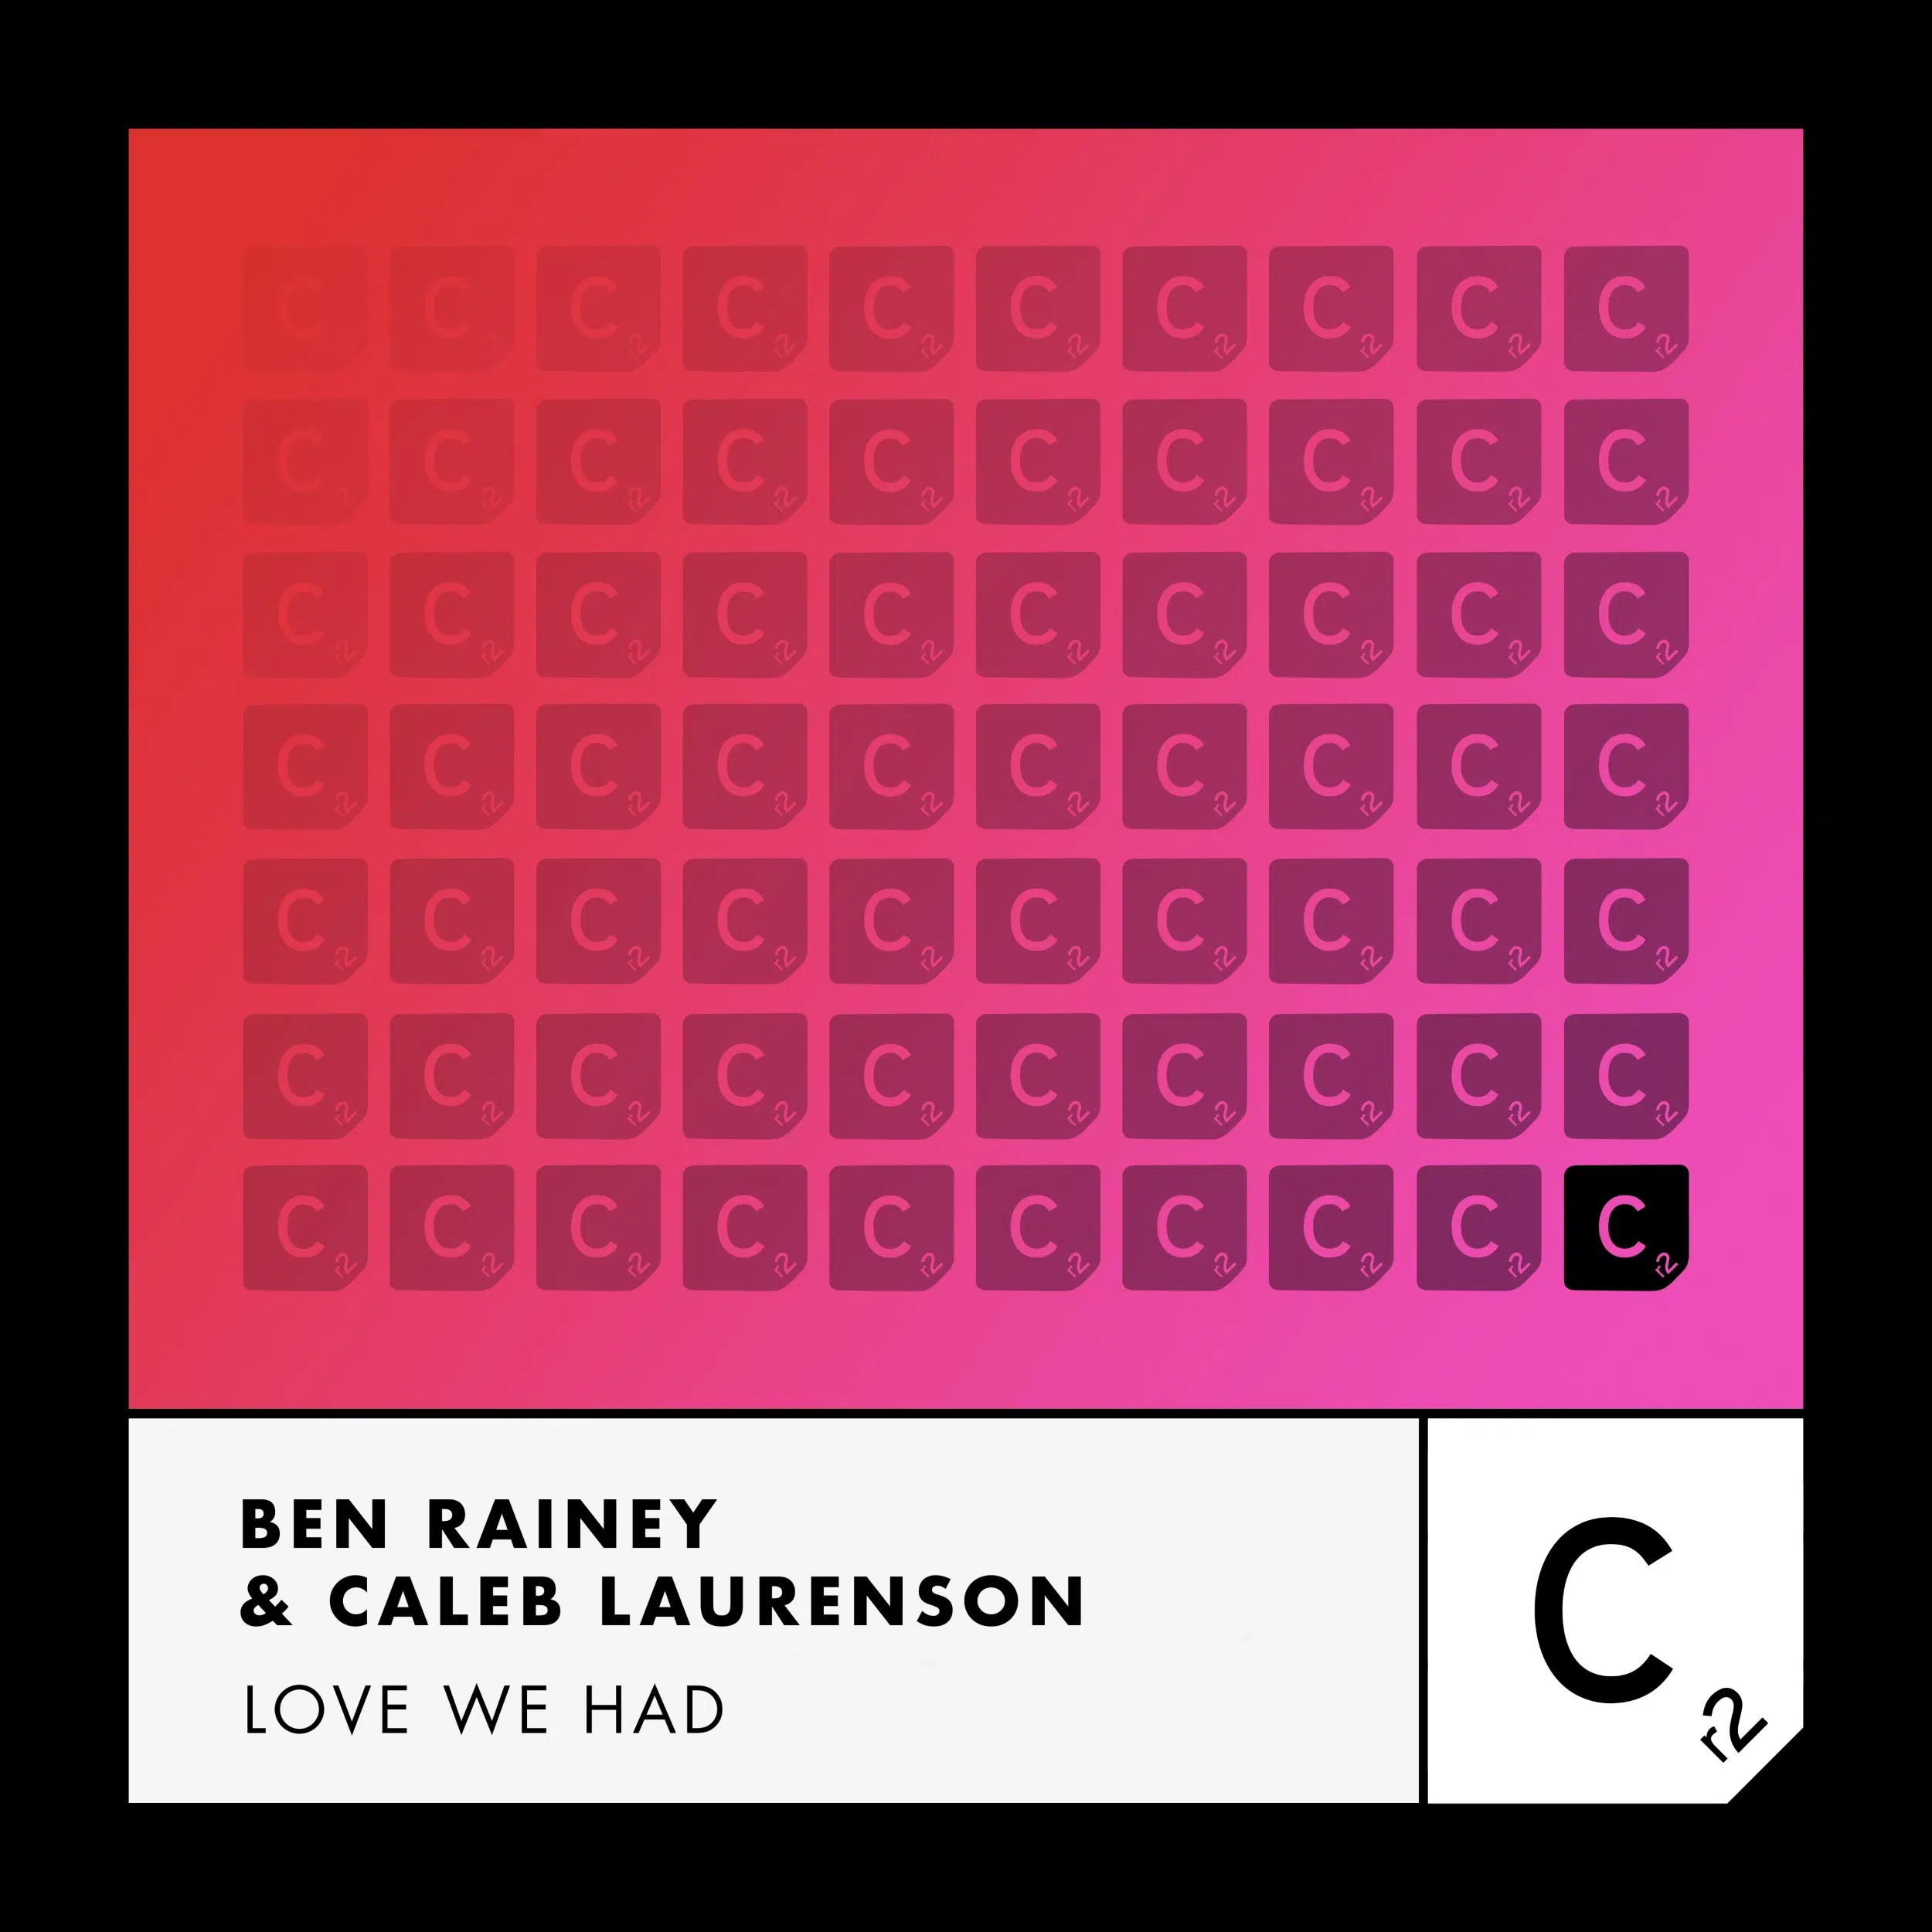 Ben Rainey & Caleb Laurenson “Love We Had”